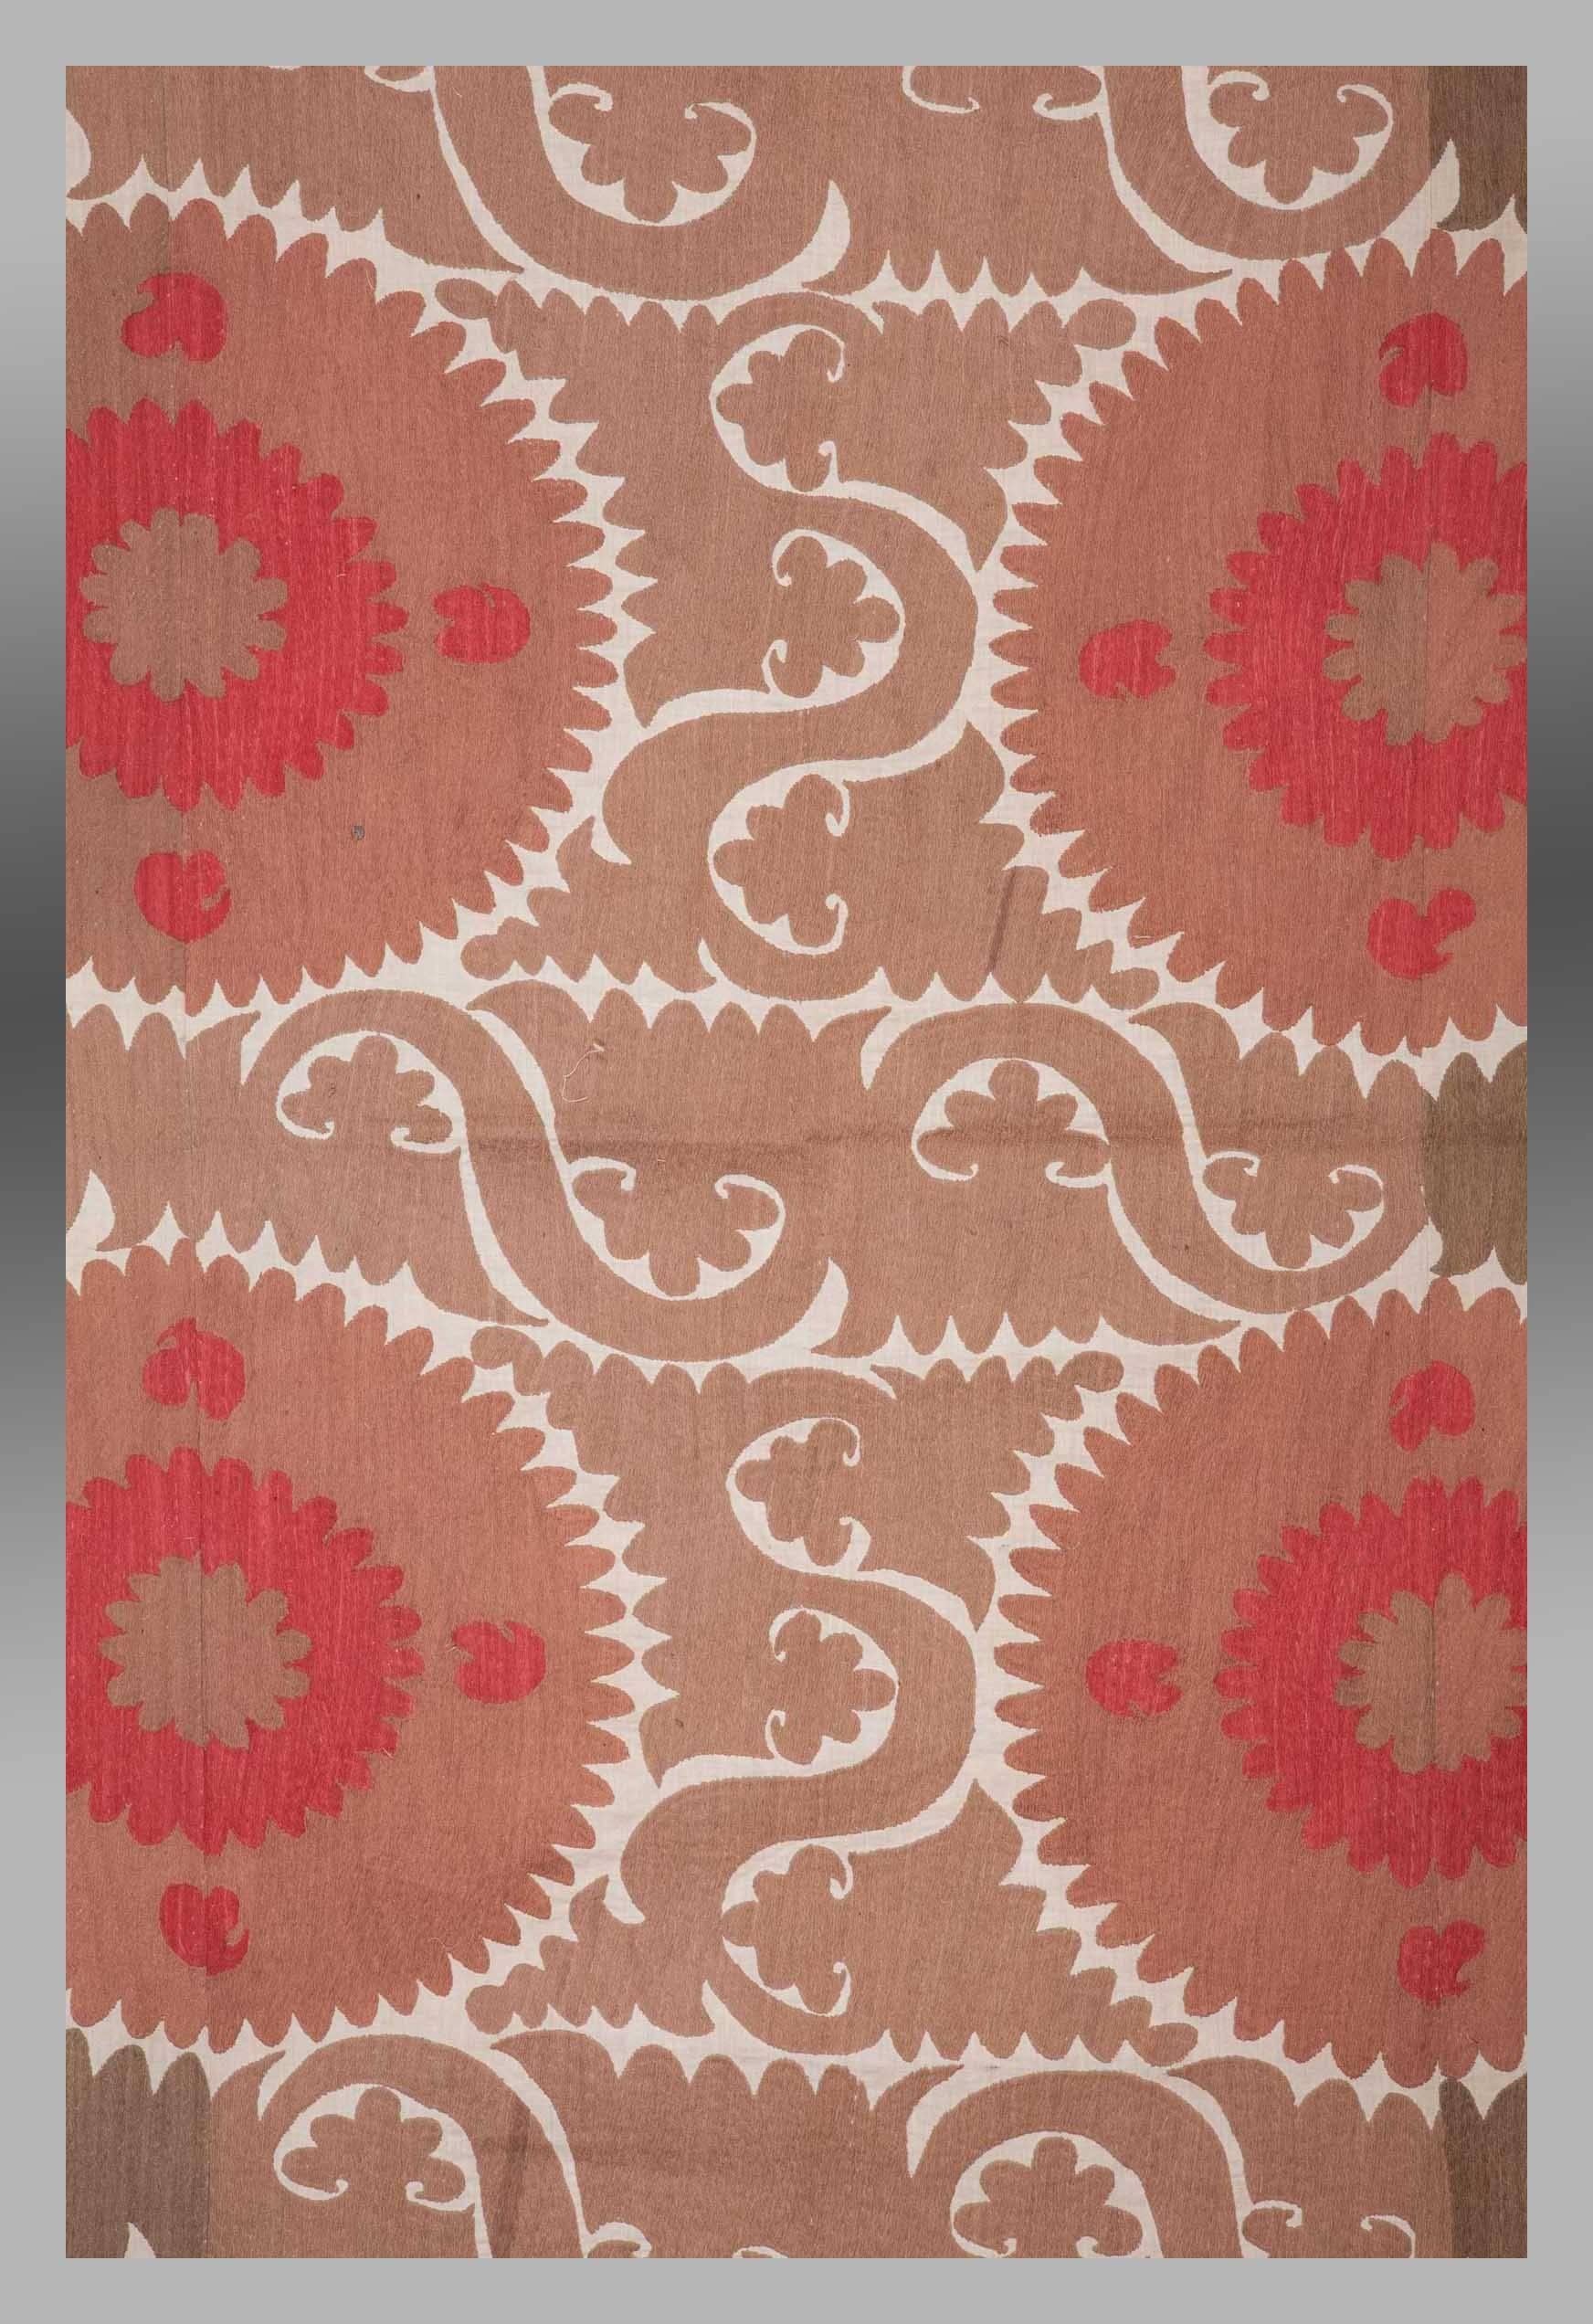 Tribal Vintage Uzbek Embroidery or 